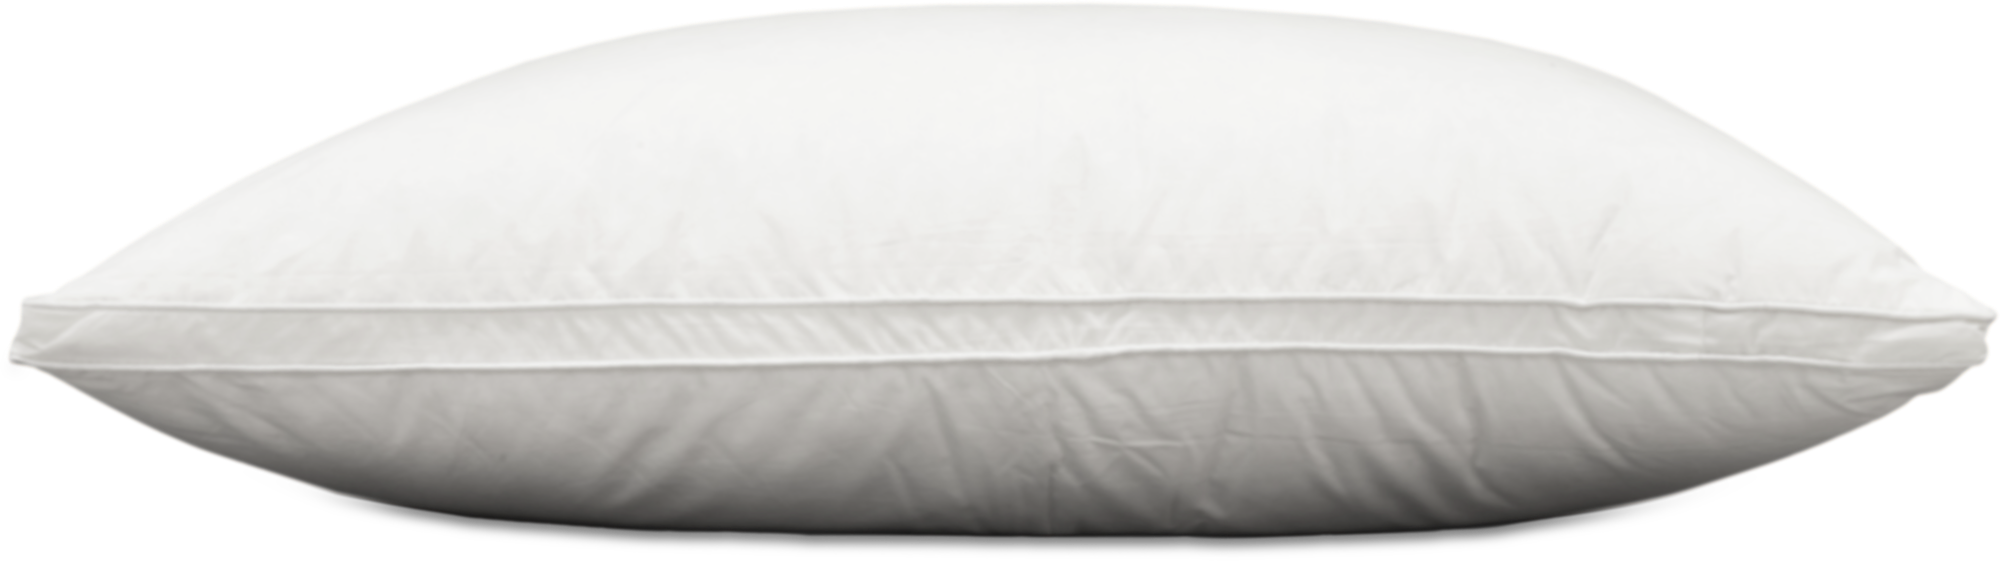 Slettvoll pillows